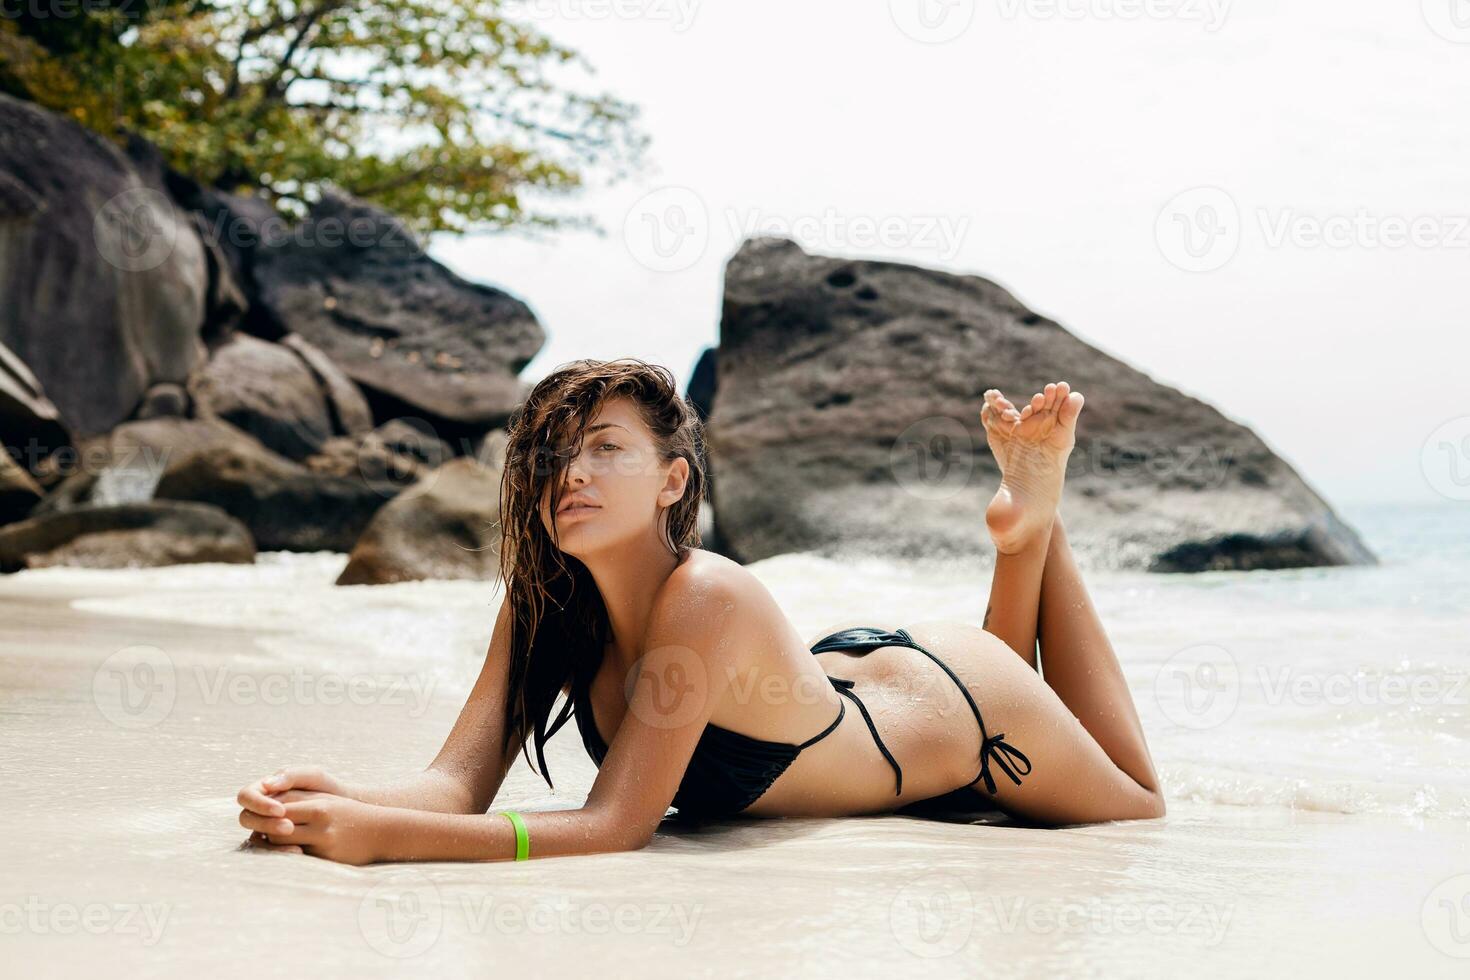 jong slank vrouw, mooi perfect lichaam, gebruind huid, bikini zwempak foto